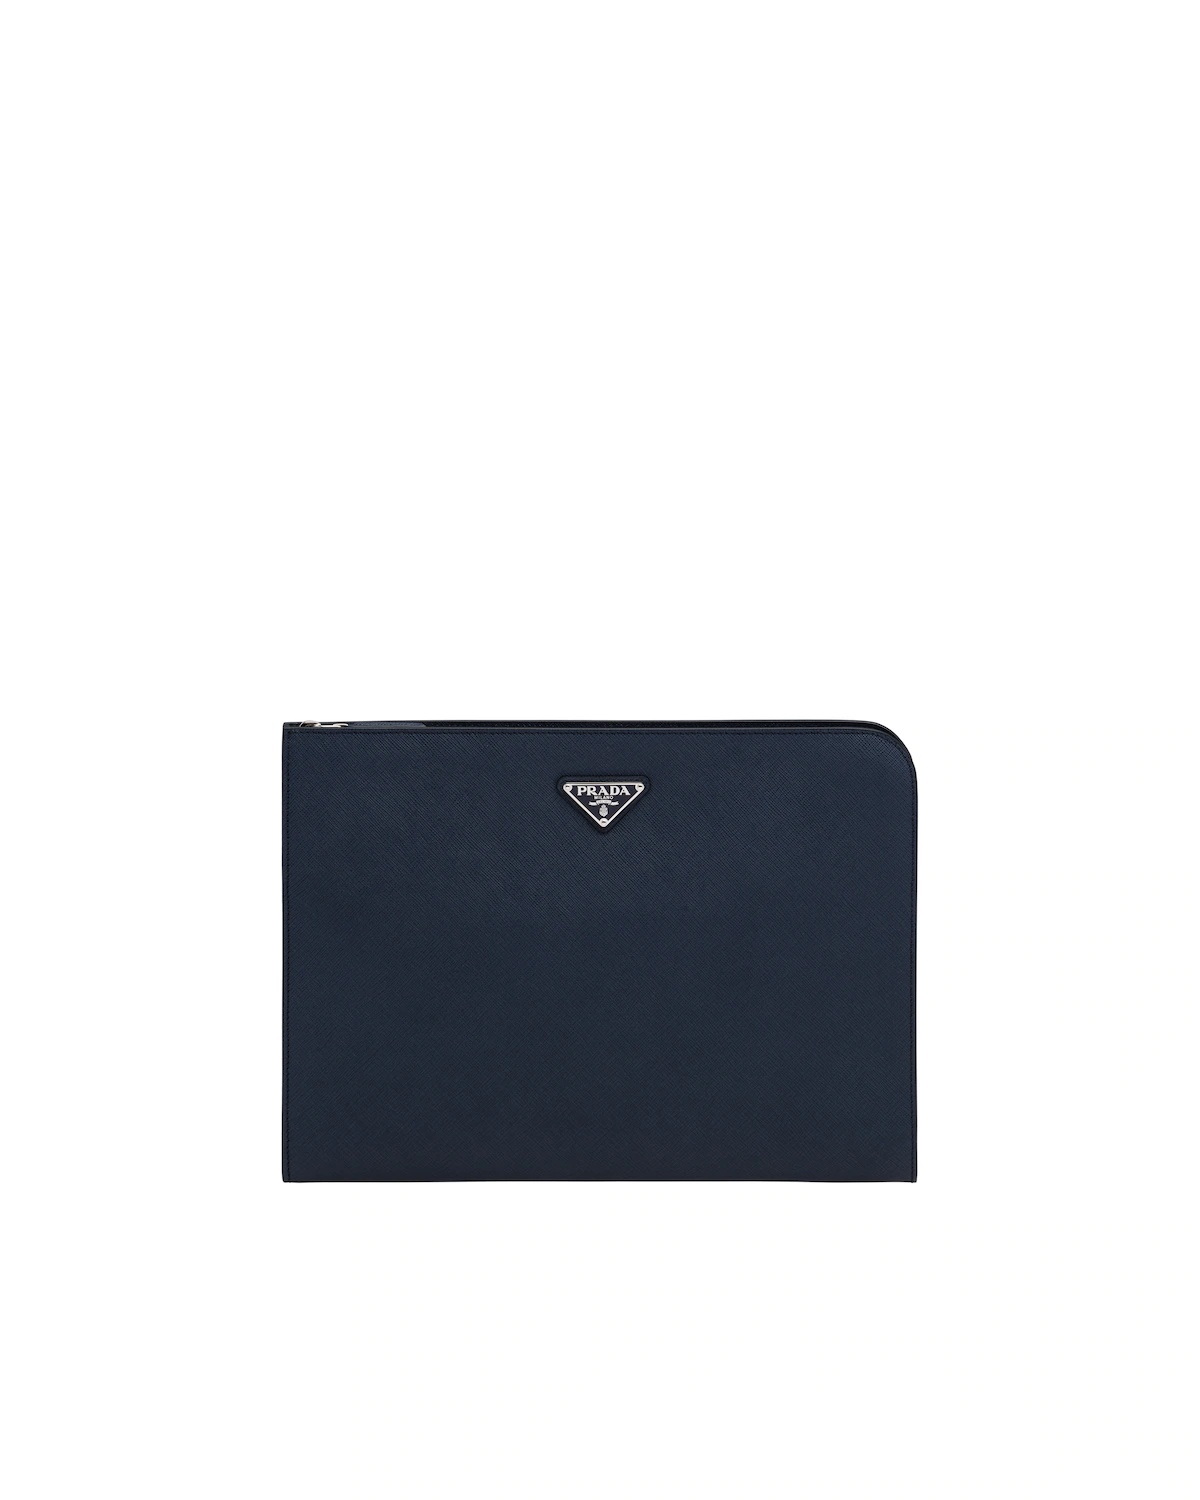 Saffiano Leather Briefcase - 1